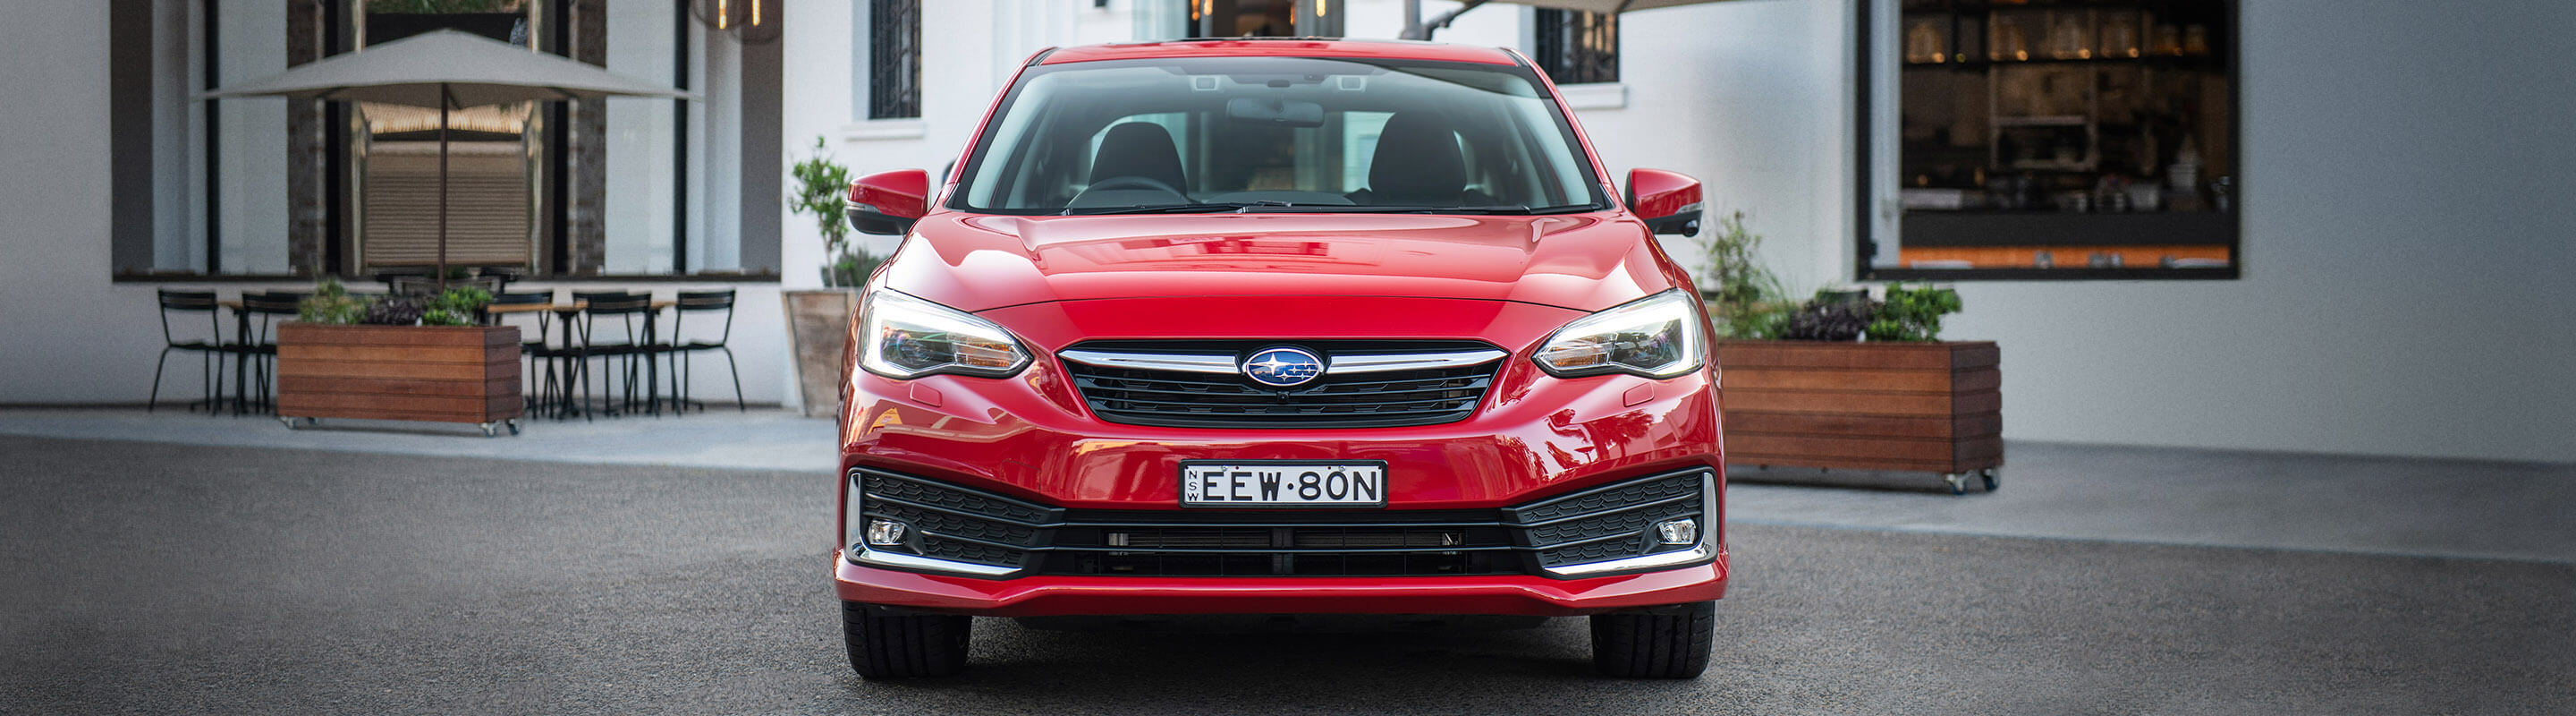 What All Wheel Drive (AWD) Sedans Are Available? | Subaru Australia